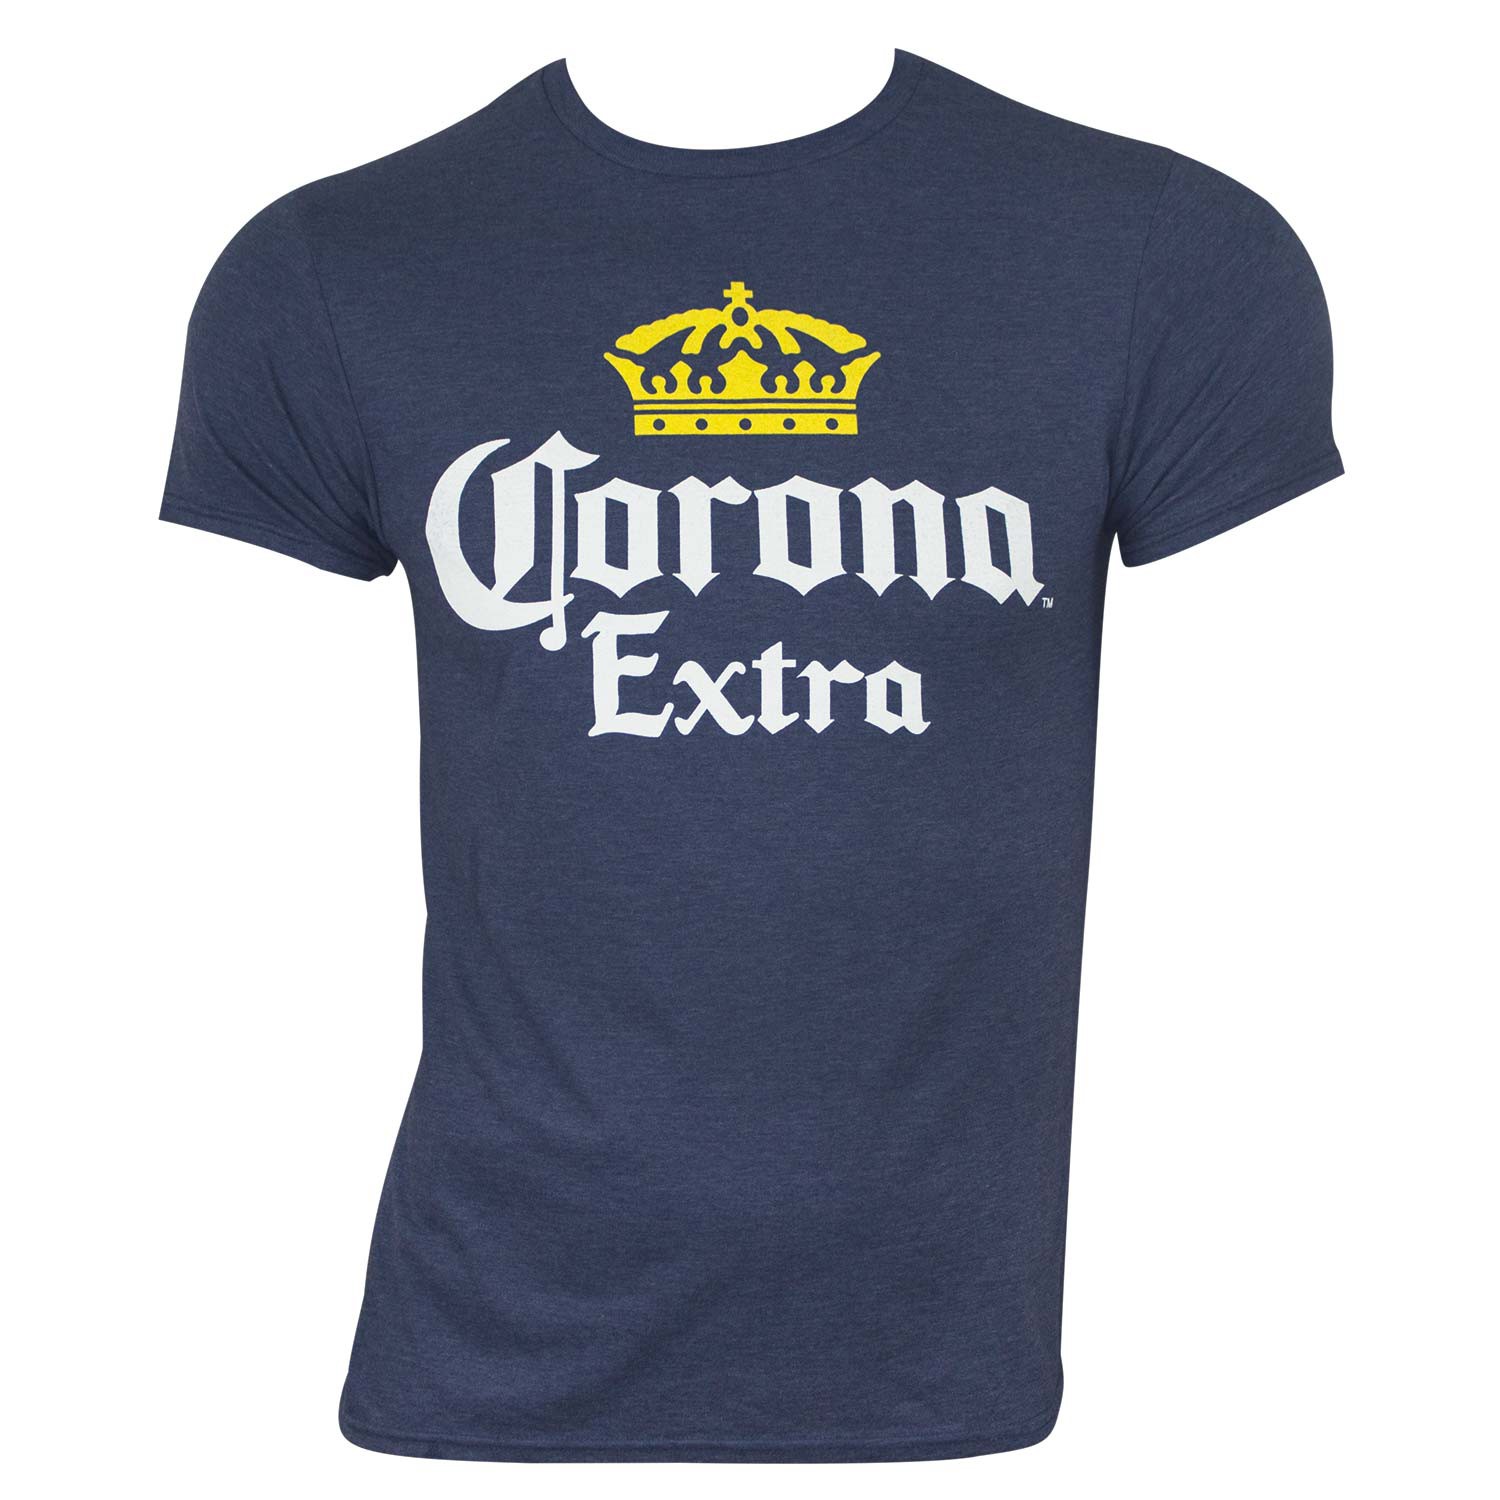 Corona Extra Classic Label Blue Tee Shirt